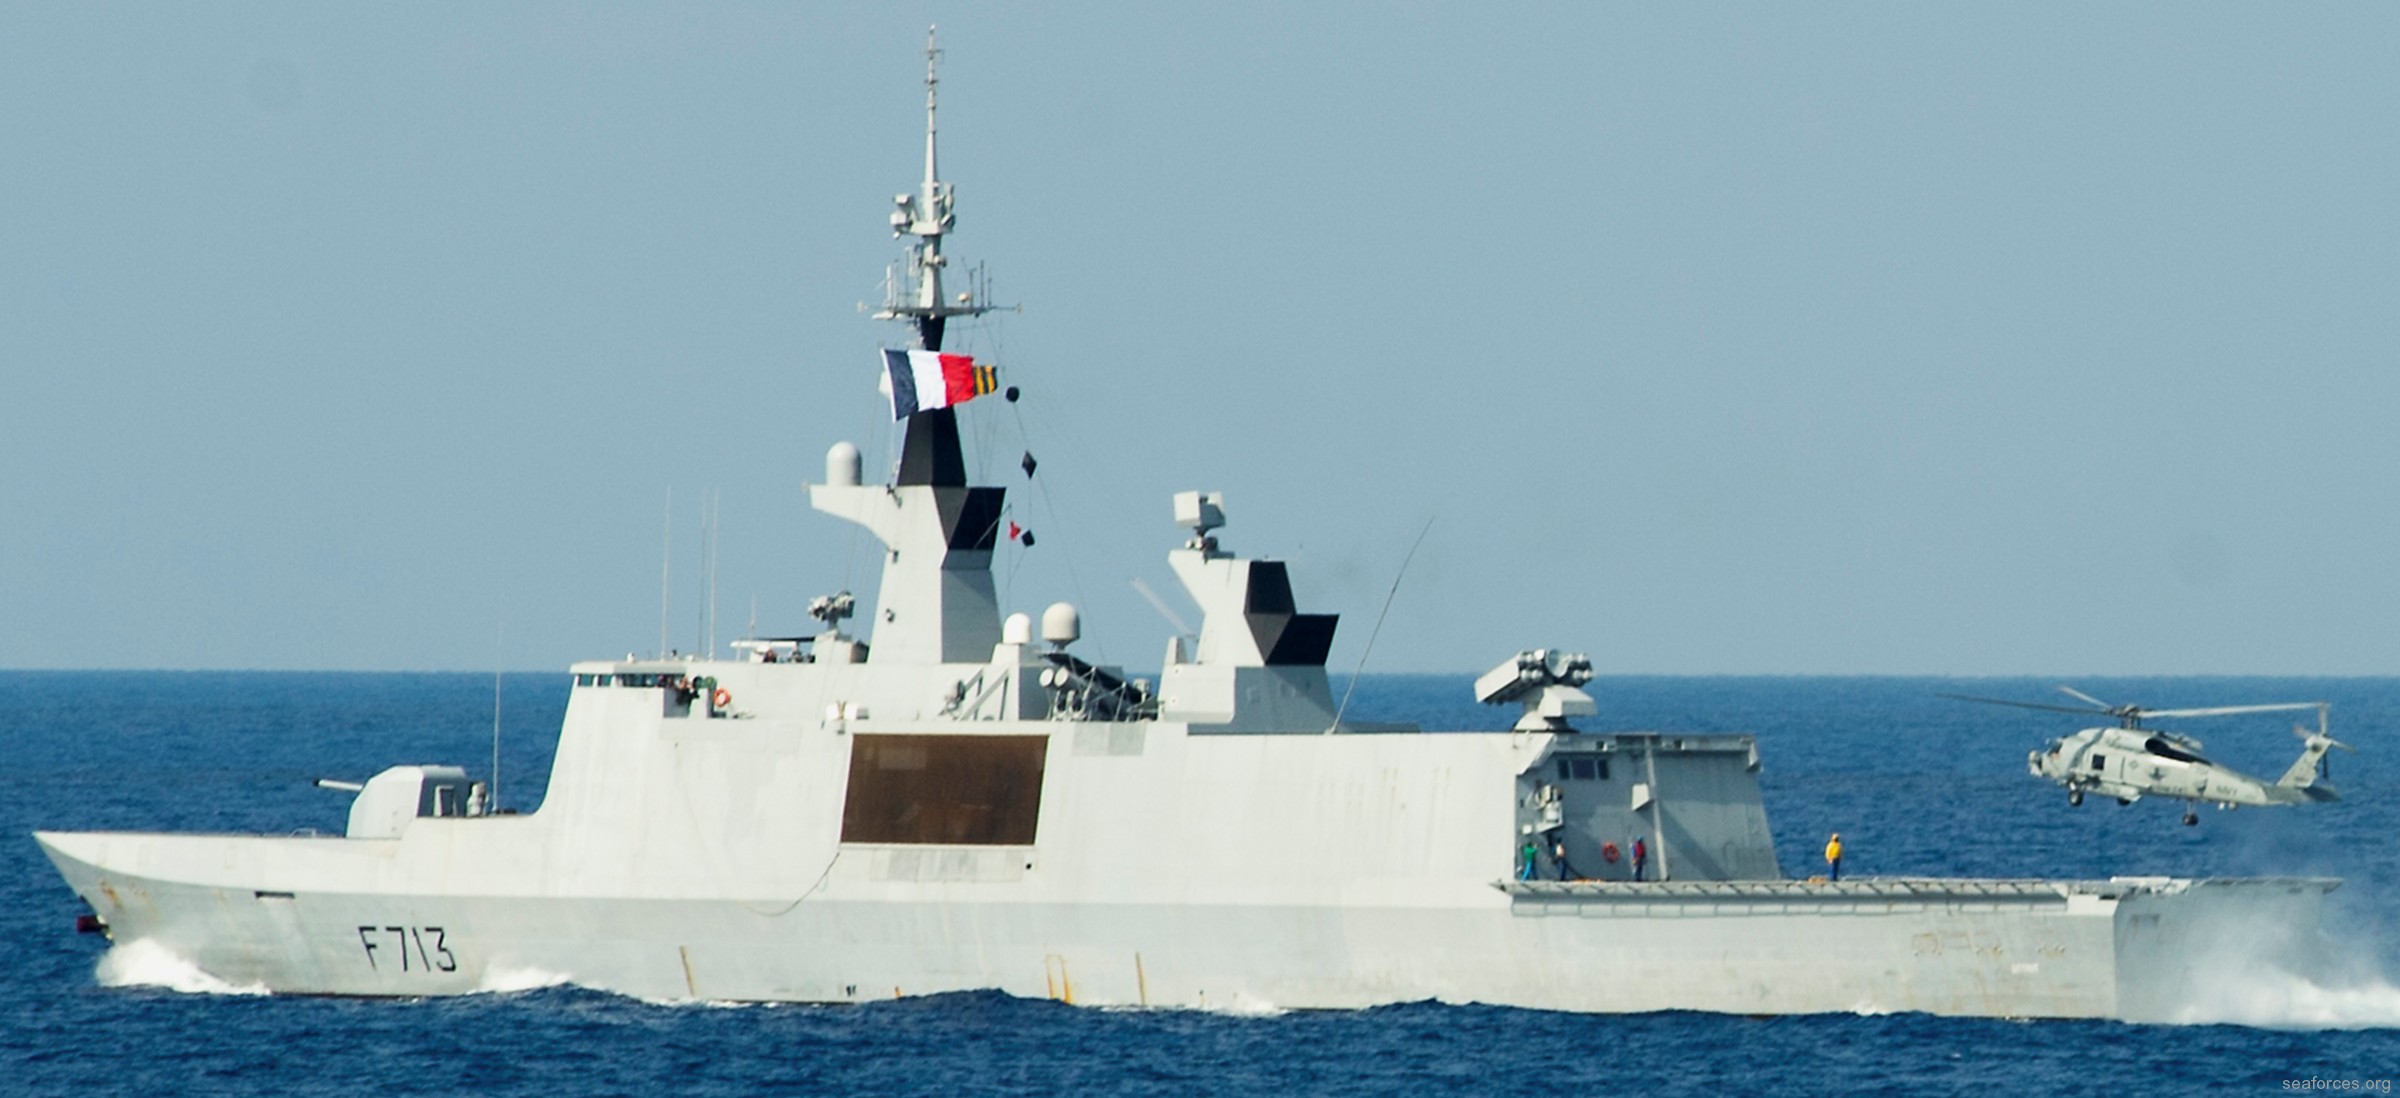 f-713 fs aconit la fayette class frigate flf french navy marine nationale 02